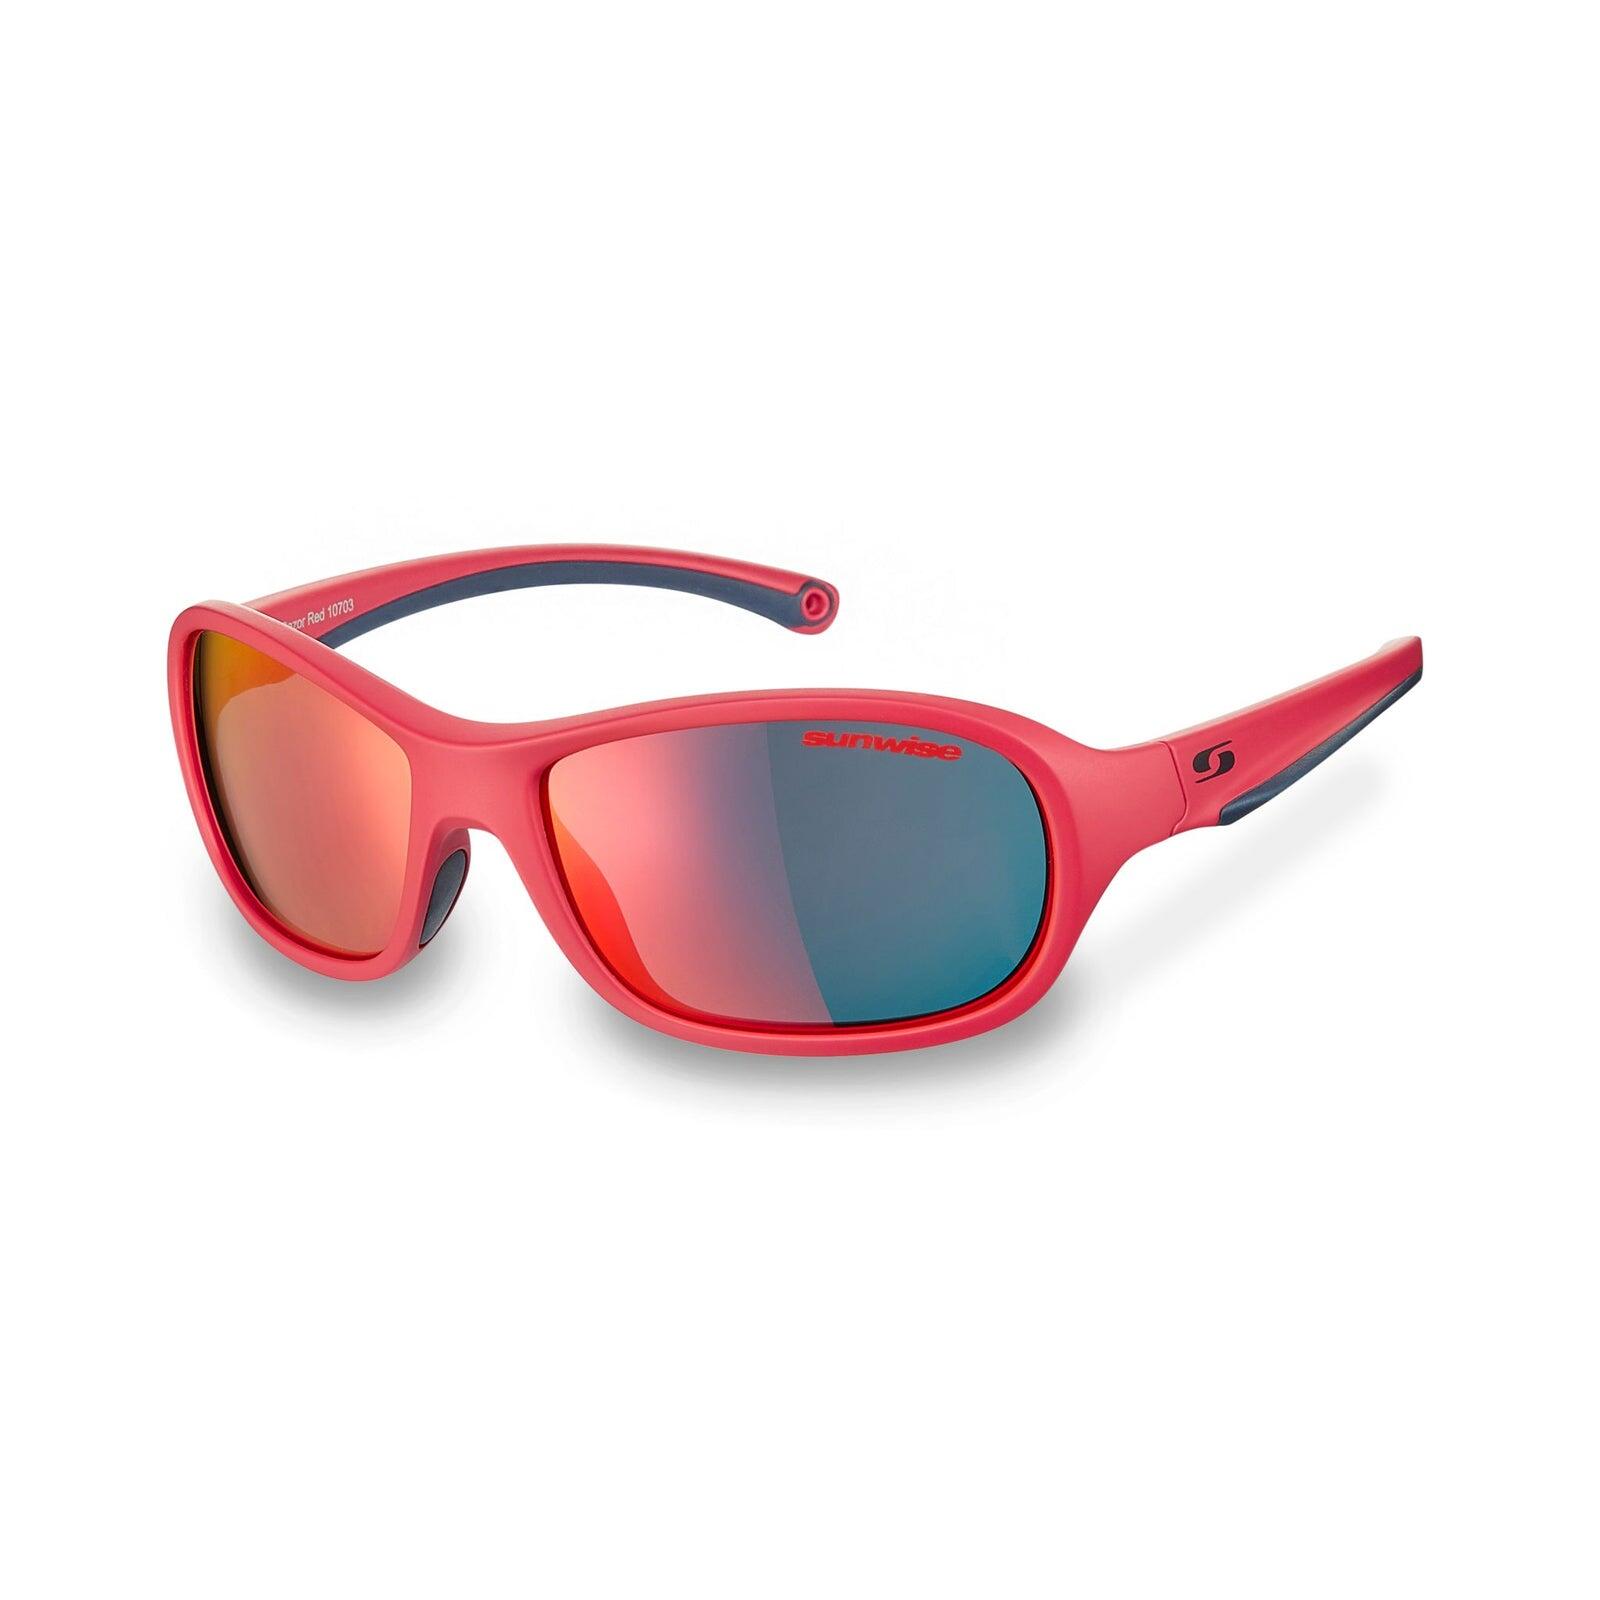 Razor Petite Sunglasses - Category 3 1/3